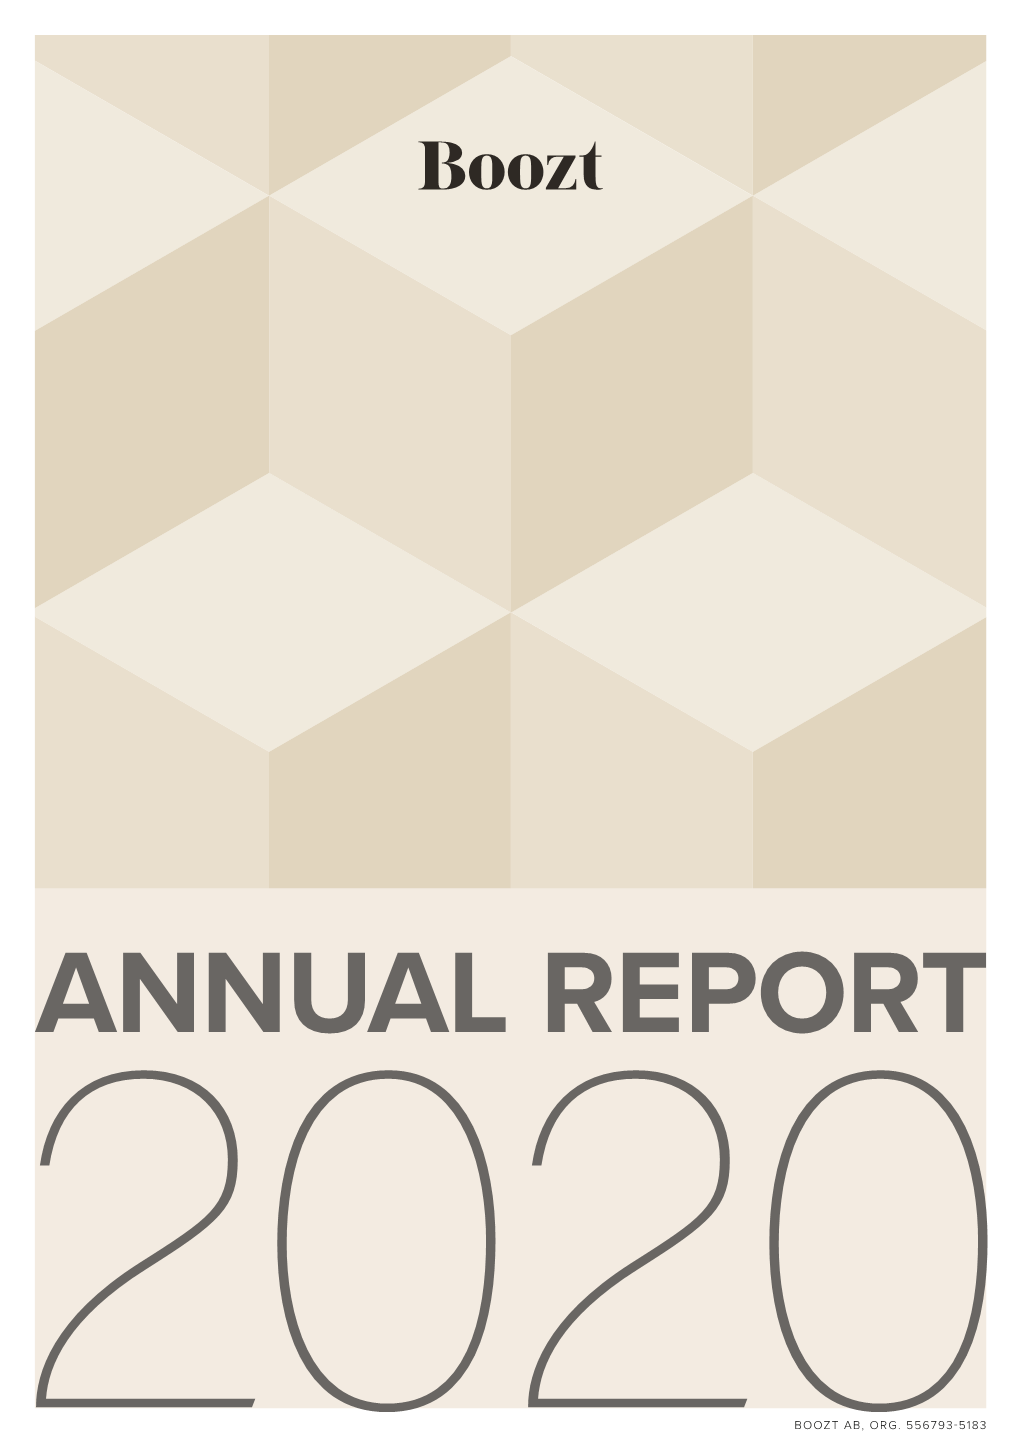 Boozt AB Annual Report 2020